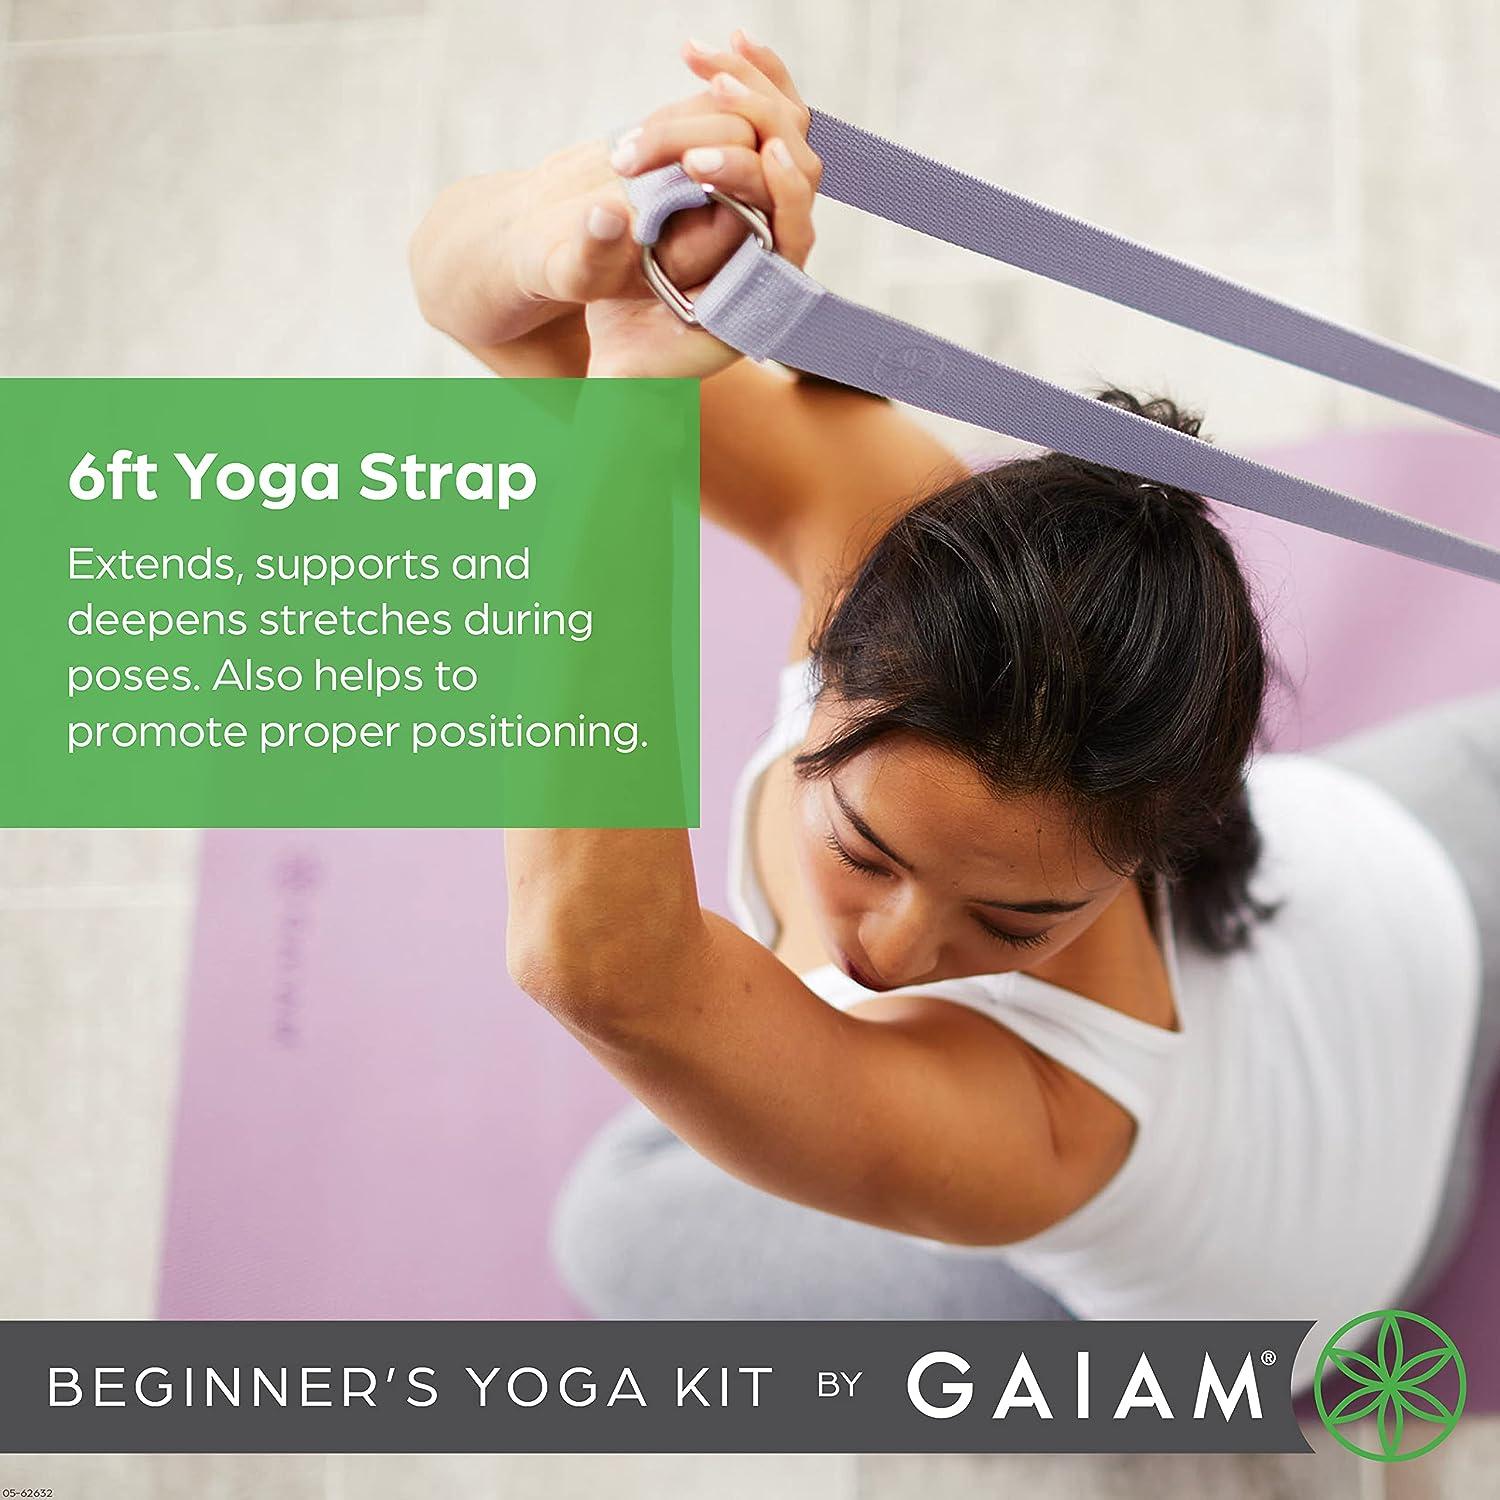 Gaiam Beginner's Yoga Starter Kit Set (Yoga Mat, Yoga Block, Yoga Strap) -  Light 4mm Thick Printed Non-Slip Exercise Mat for Everyday Yoga - Includes  6ft Yoga Strap & Yoga Brick - Lily Shadows, Starter Sets -  Canada